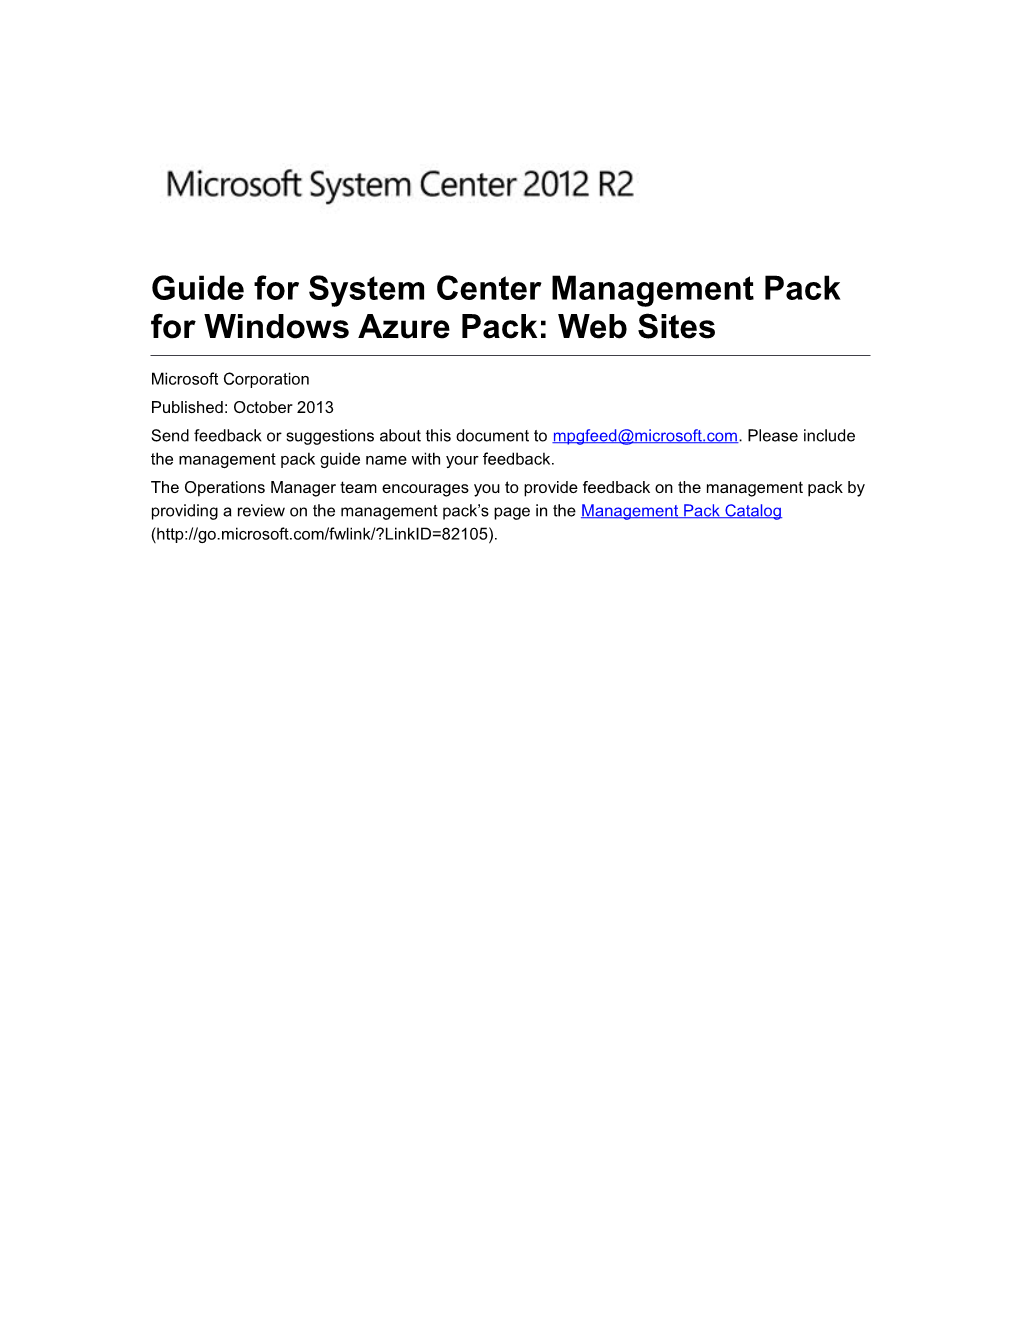 Guide for System Center Management Pack for Windows Azure Pack: Web Sites